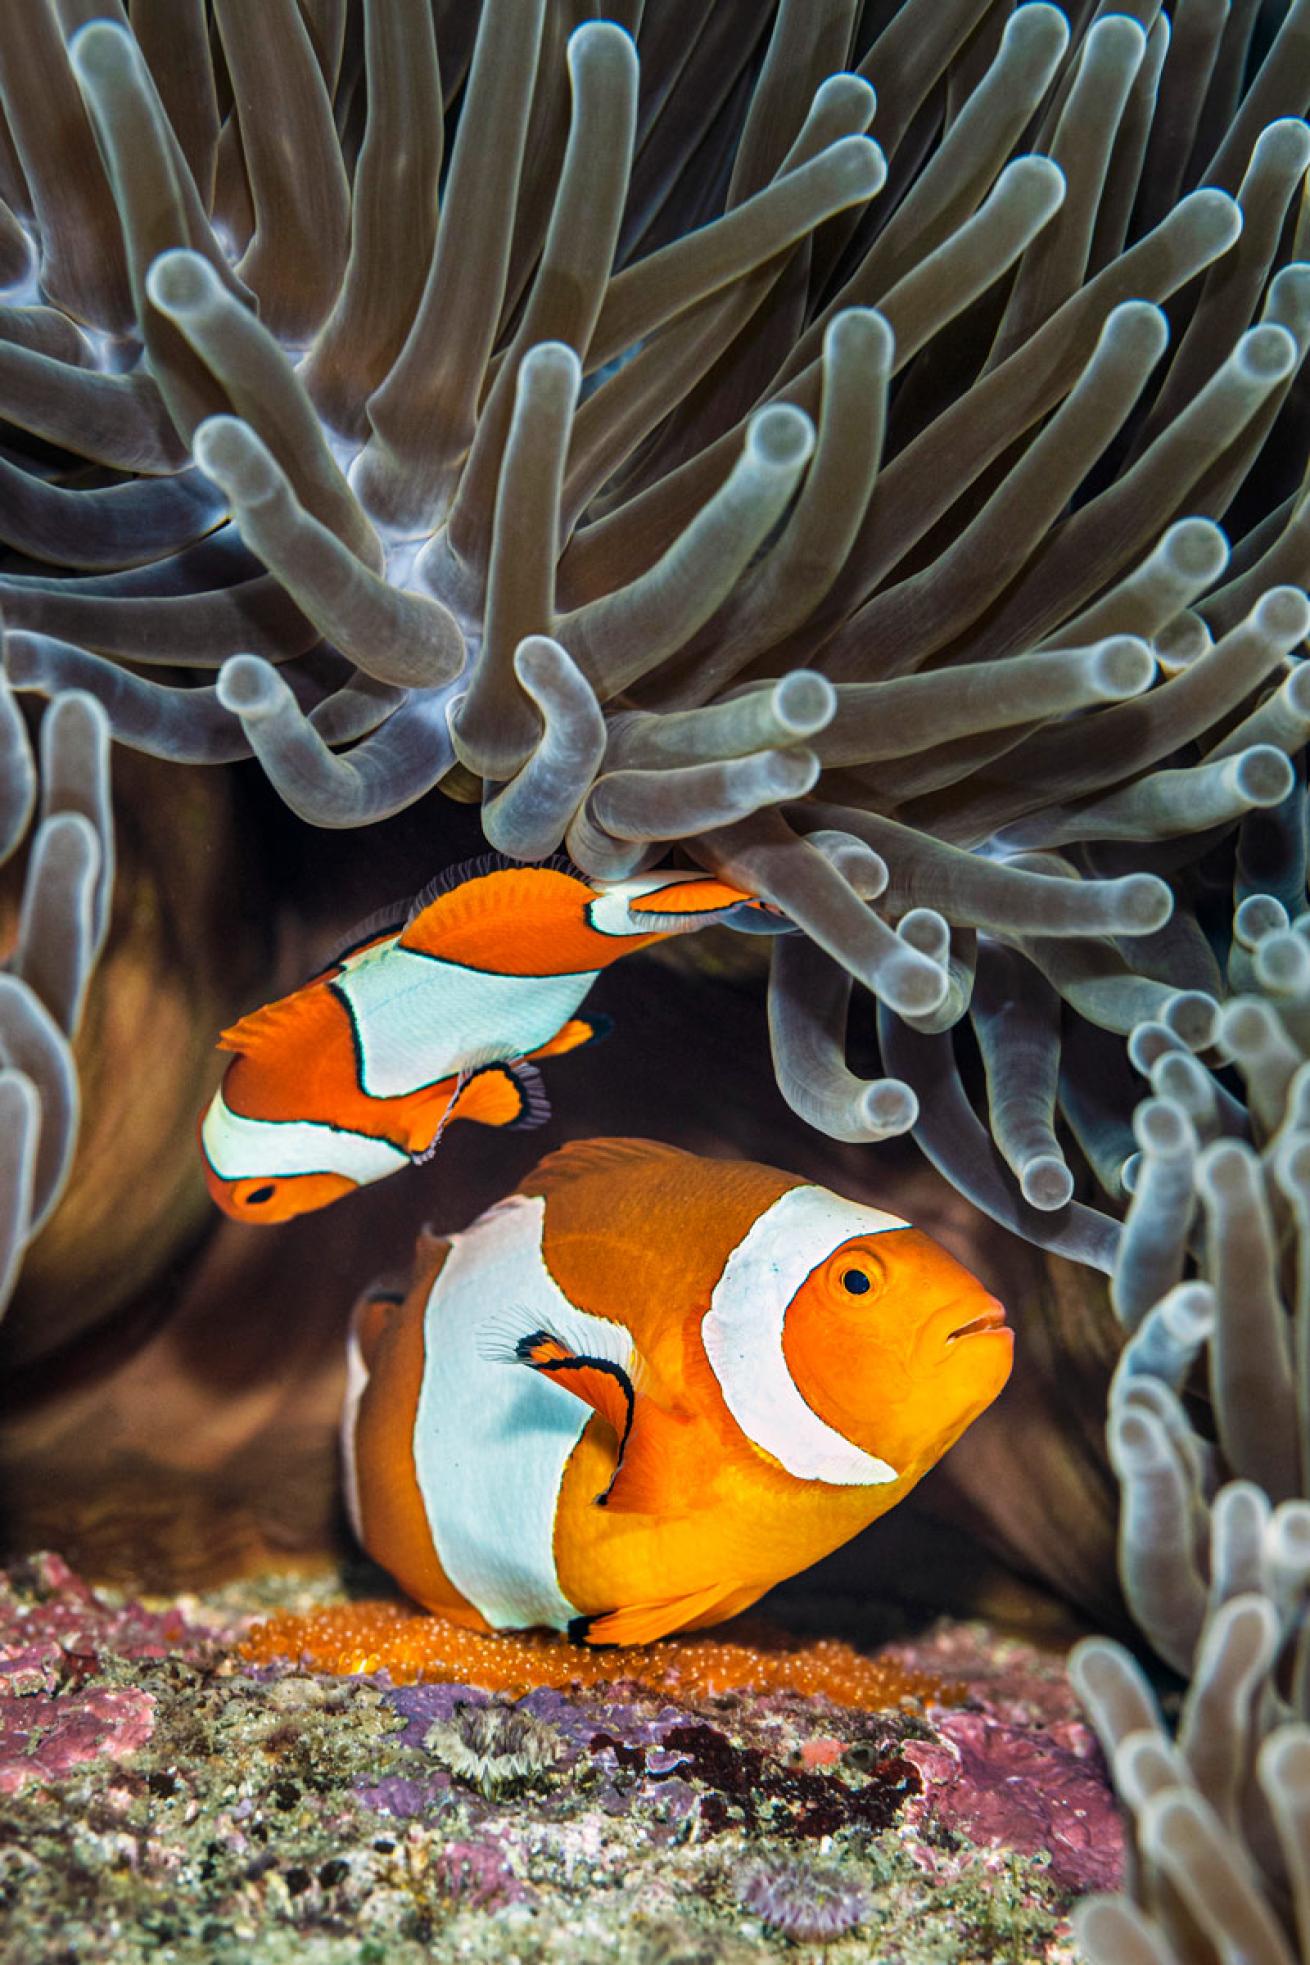  female clownfish lays orange eggs